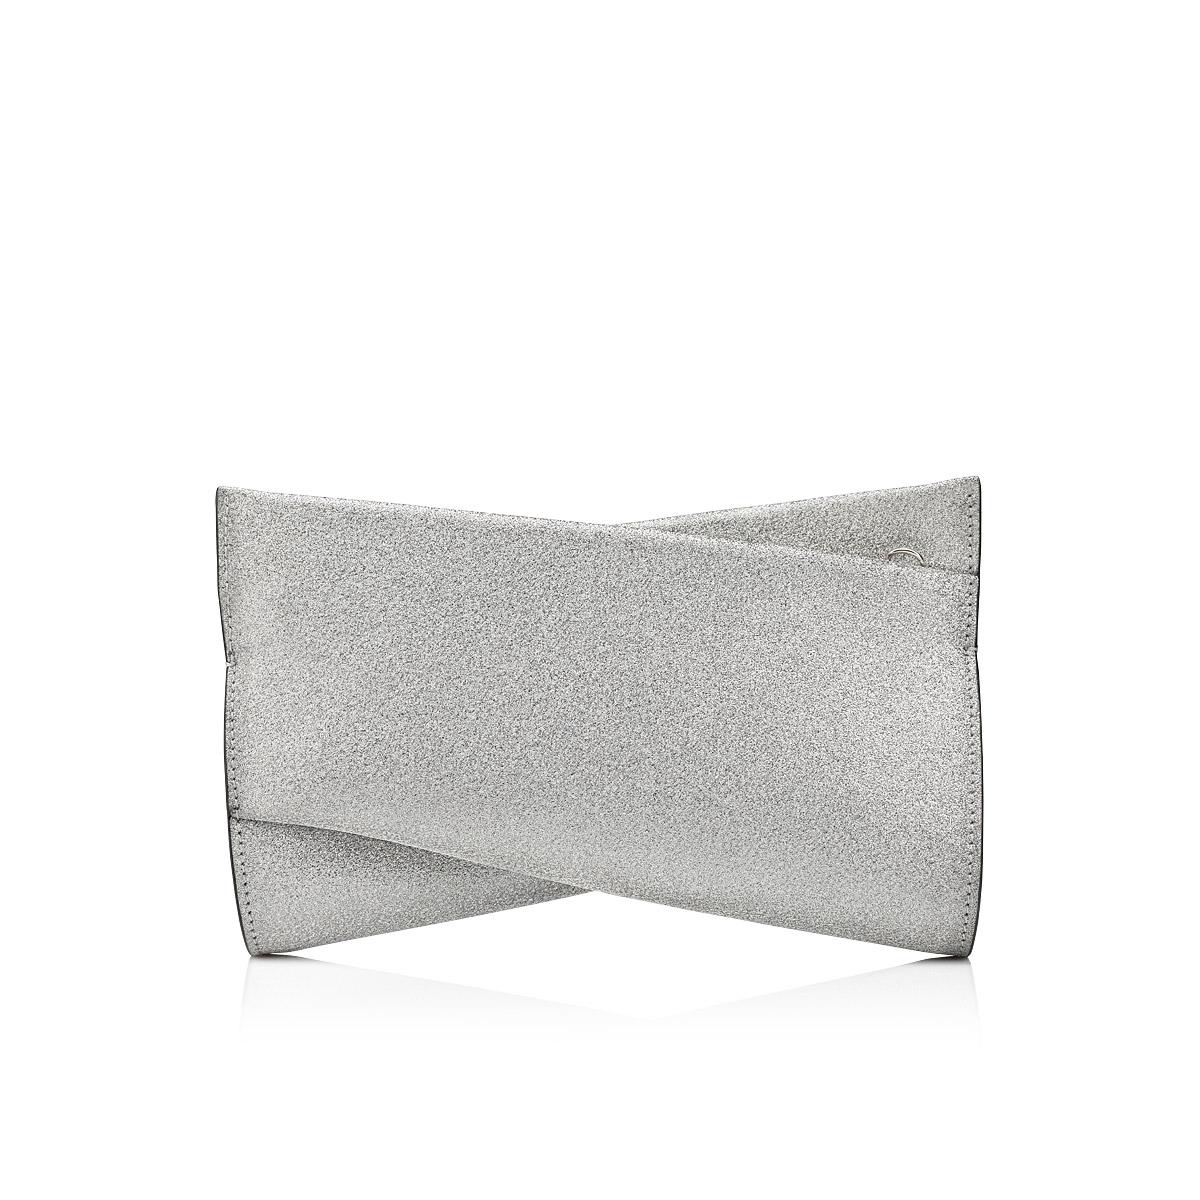 Nicoleta' Mini calf leather bag with silver clasp